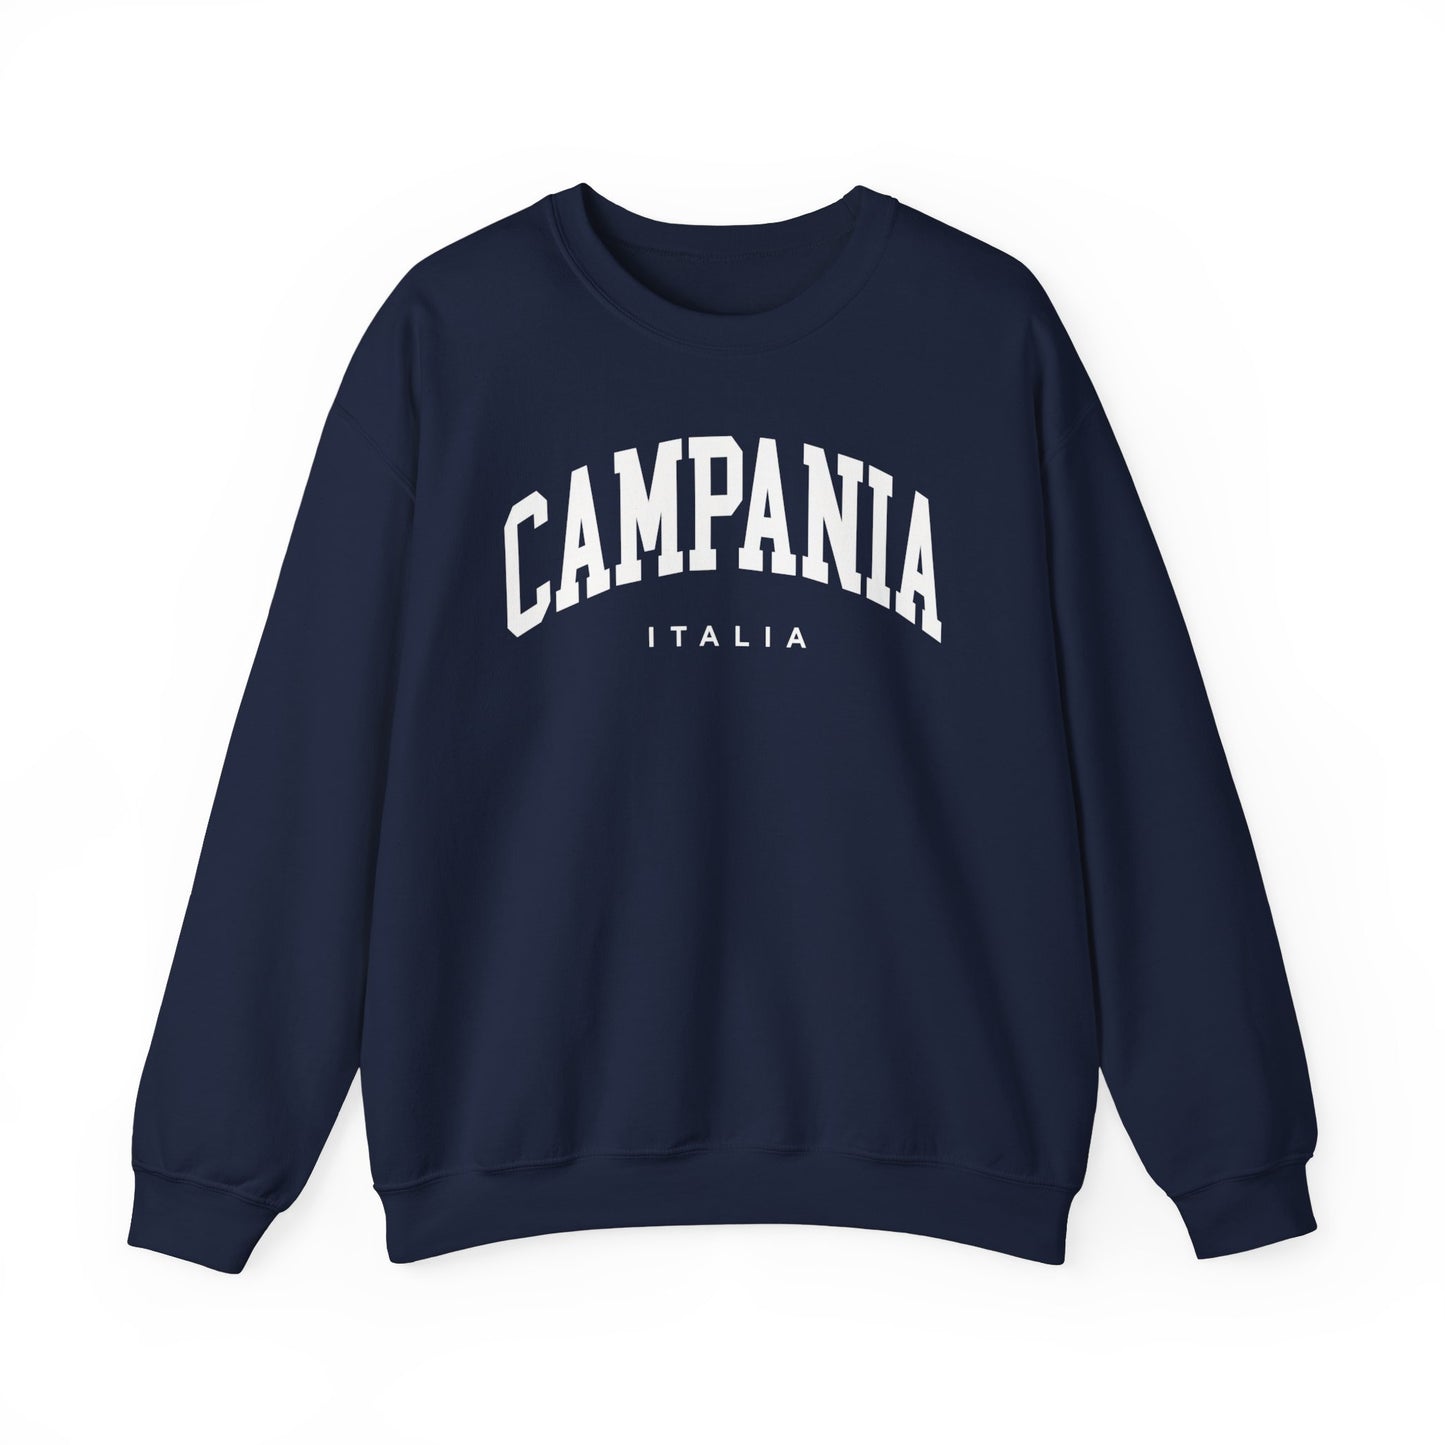 Campania Italy Sweatshirt